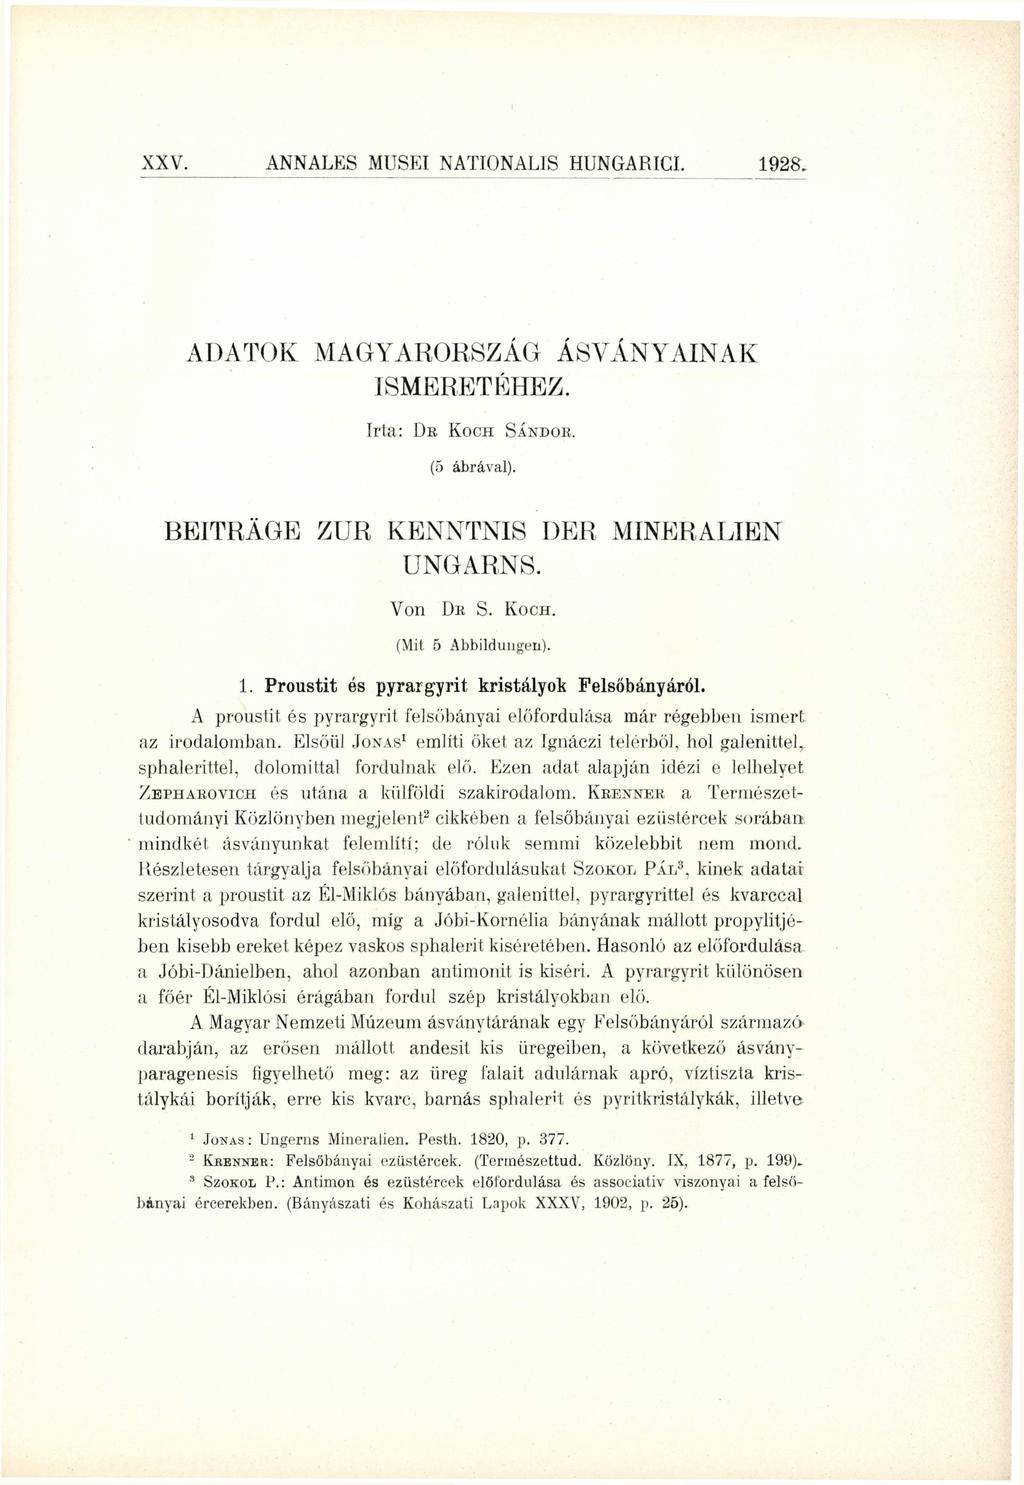 XXV. ANNALES MUSEI NATIONALIS HUNGARICI. 1928. ADATOK MAGYARORSZÁG ÁSVÁNYAINAK ISMERETÉHEZ. Irta: DR KOCH SÁNDOR. (5 ábrával). BEITRÄGE ZUR KENNTNIS DER MINERALIEN UNGARNS. Von DR S. KOCH. (Mit 5 Abbildungen).